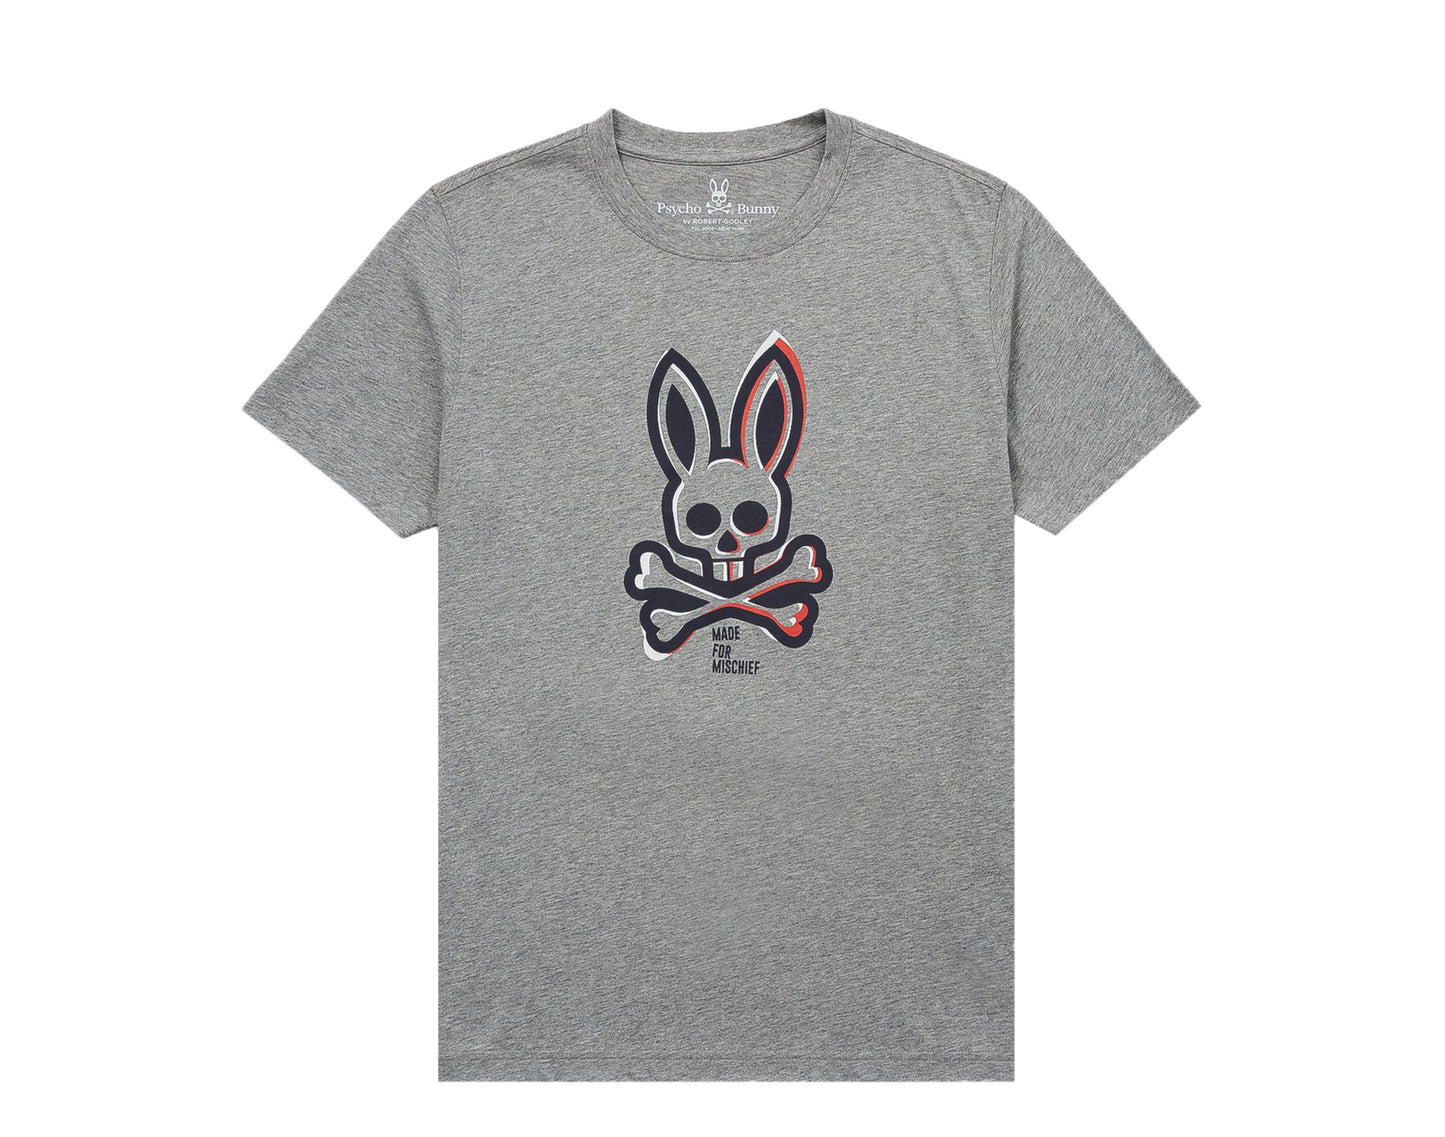 Psycho Bunny Loyn Graphic Heather Grey Men's Tee Shirt B6U297E1PC-HGY